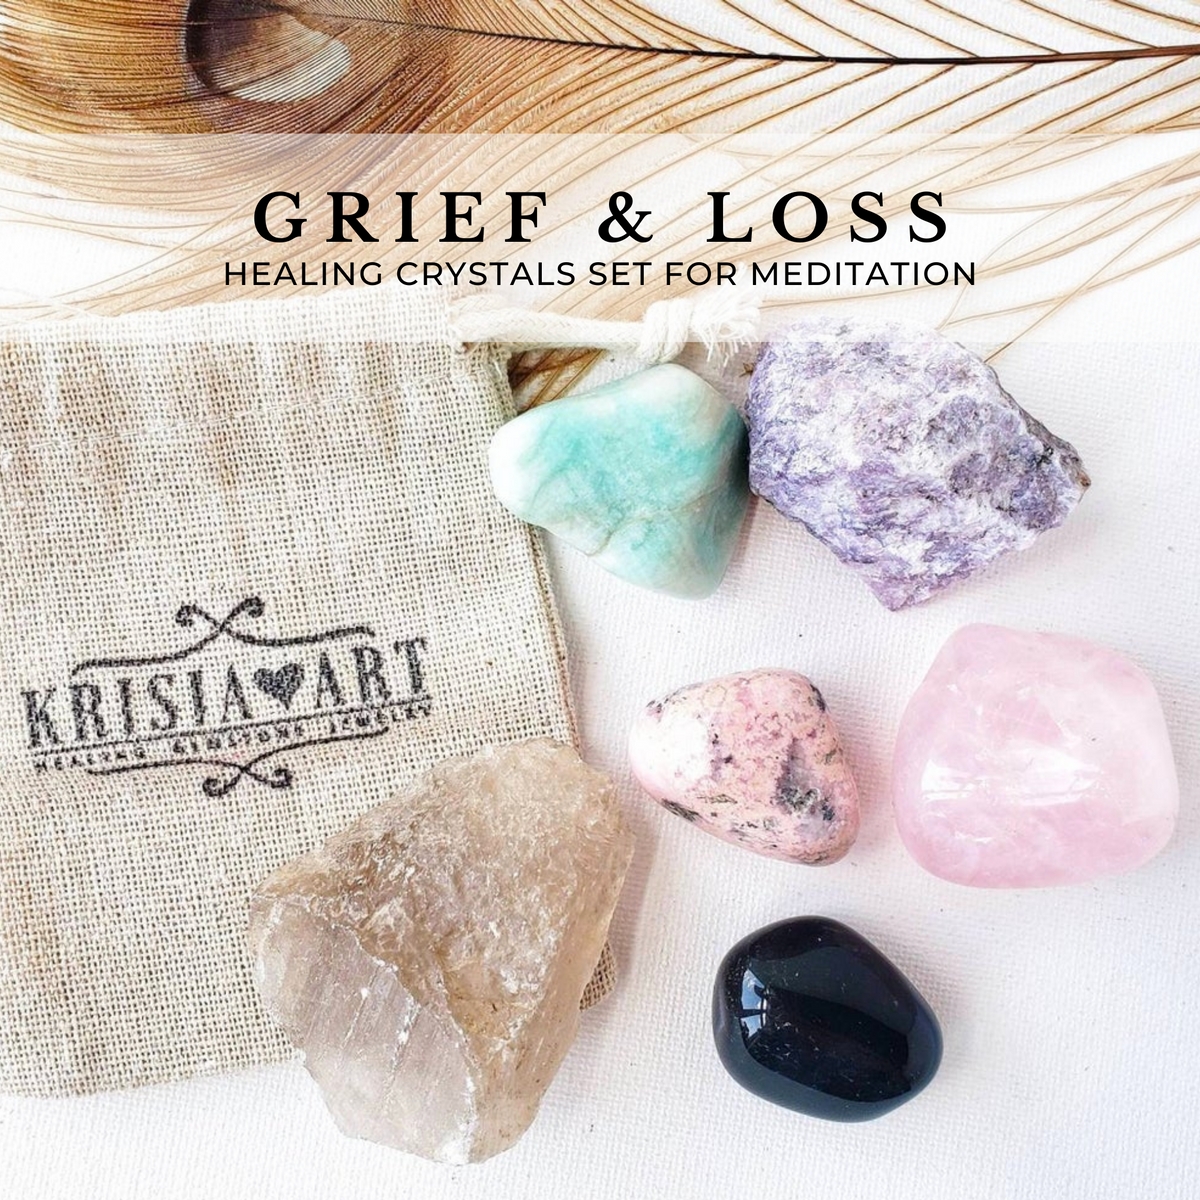 GRIEF & LOSS crystal set for calming and meditation during breakup, divorce, loss, sadness. Onyx, Rhodonite, Lepidolite, Amazonite, Rose quartz, Smoky quartz